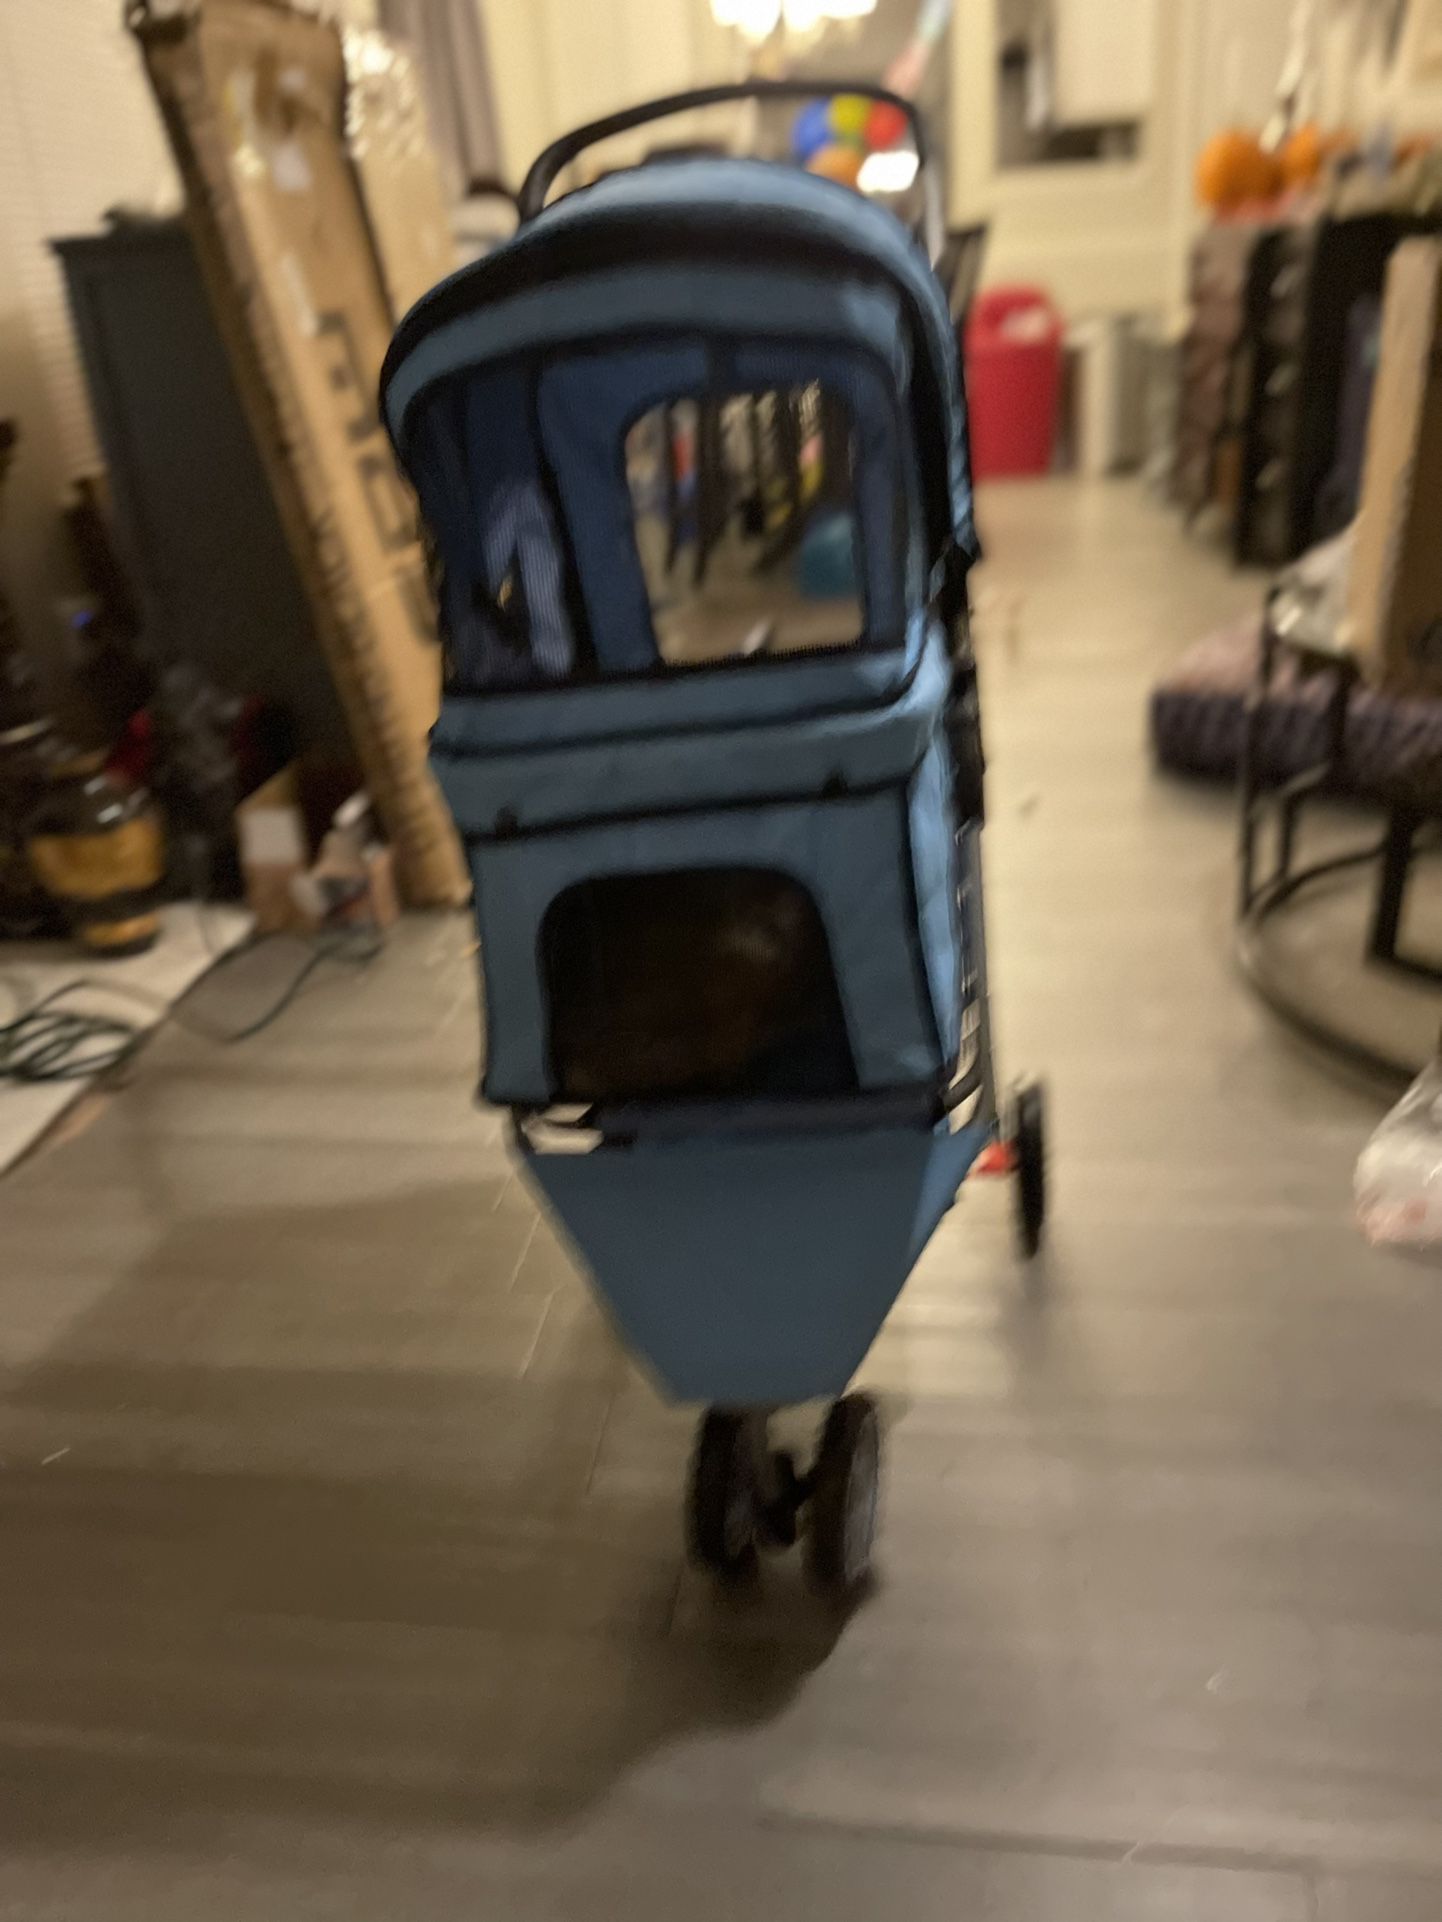 Blue Pet Stroller 